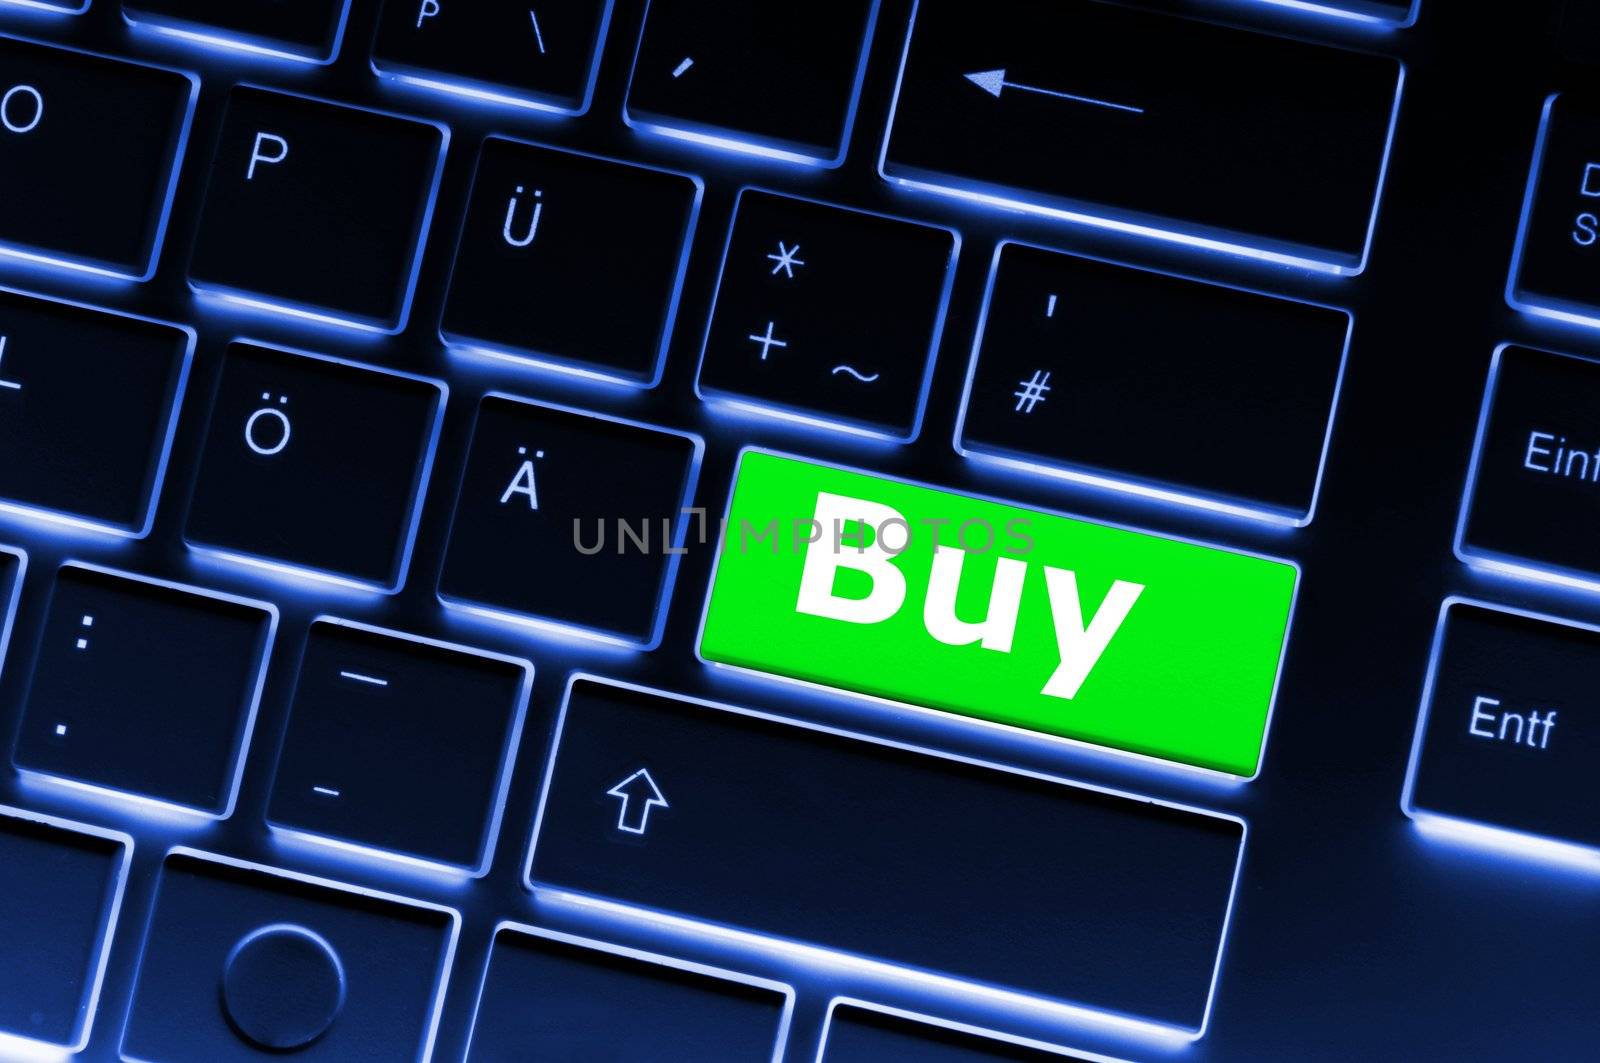 buy key showing internet commerce or online shop concept